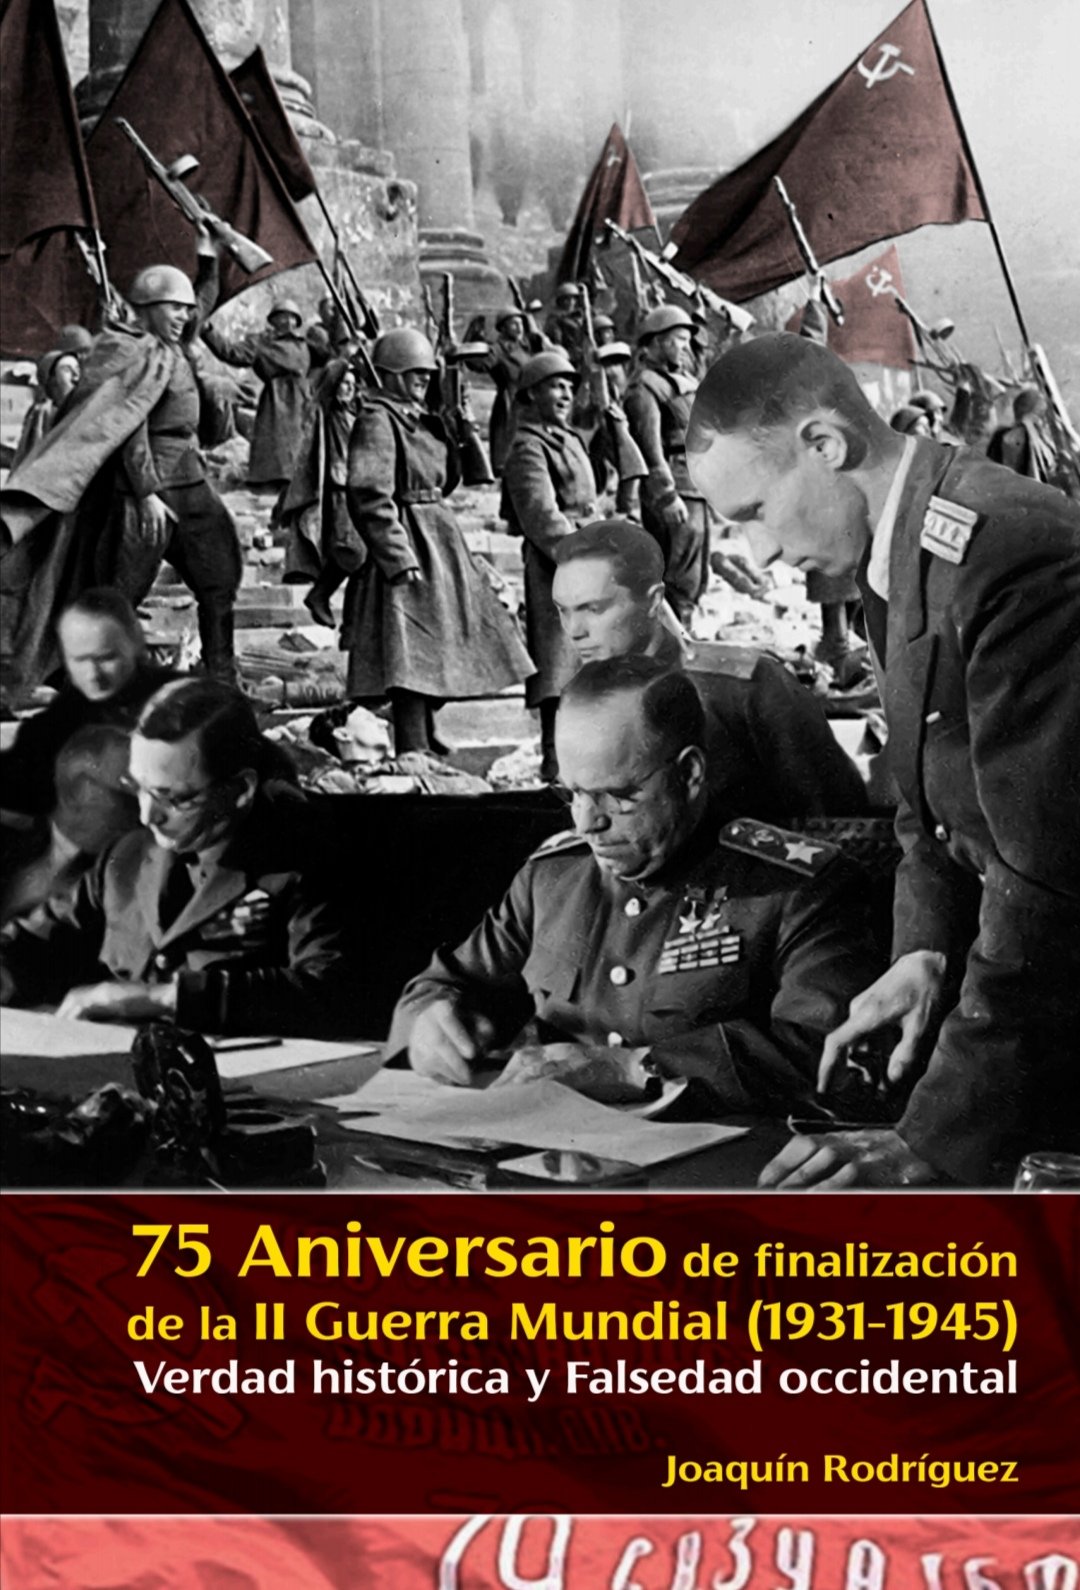 75 aniversario II Guerra Mundial. Joaquin Rodriguez